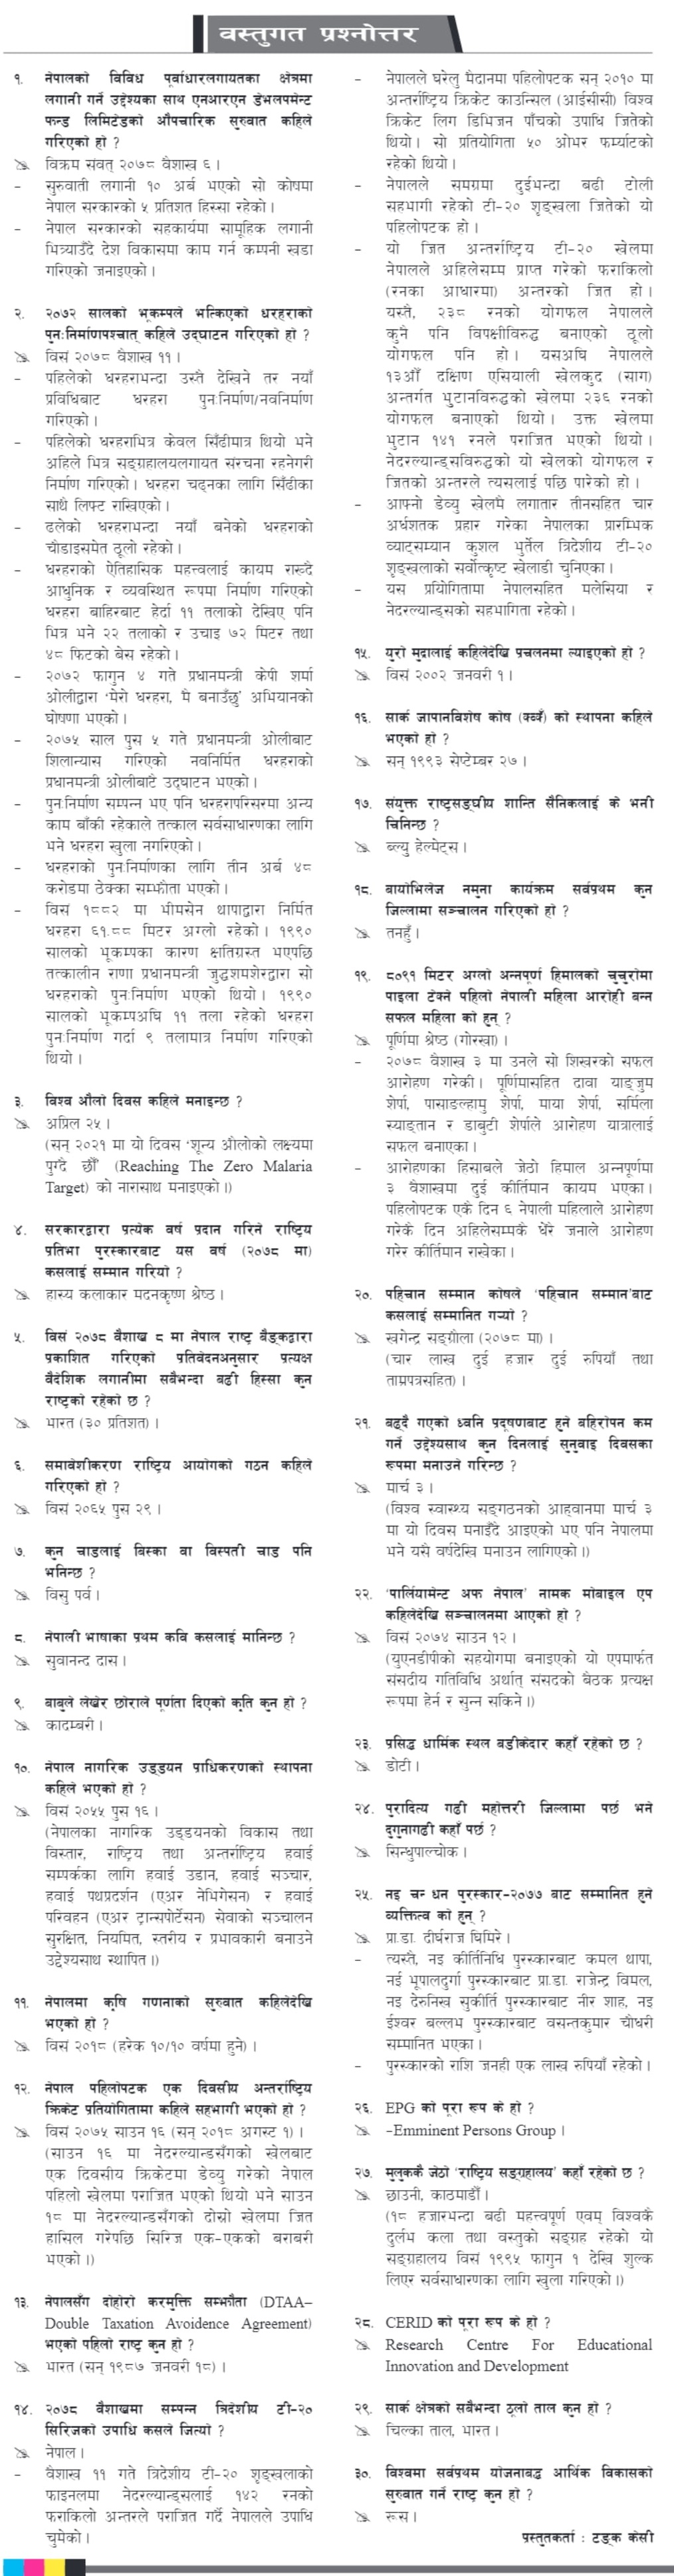 Gorkhapatra Bastugat Question 2079-01-15